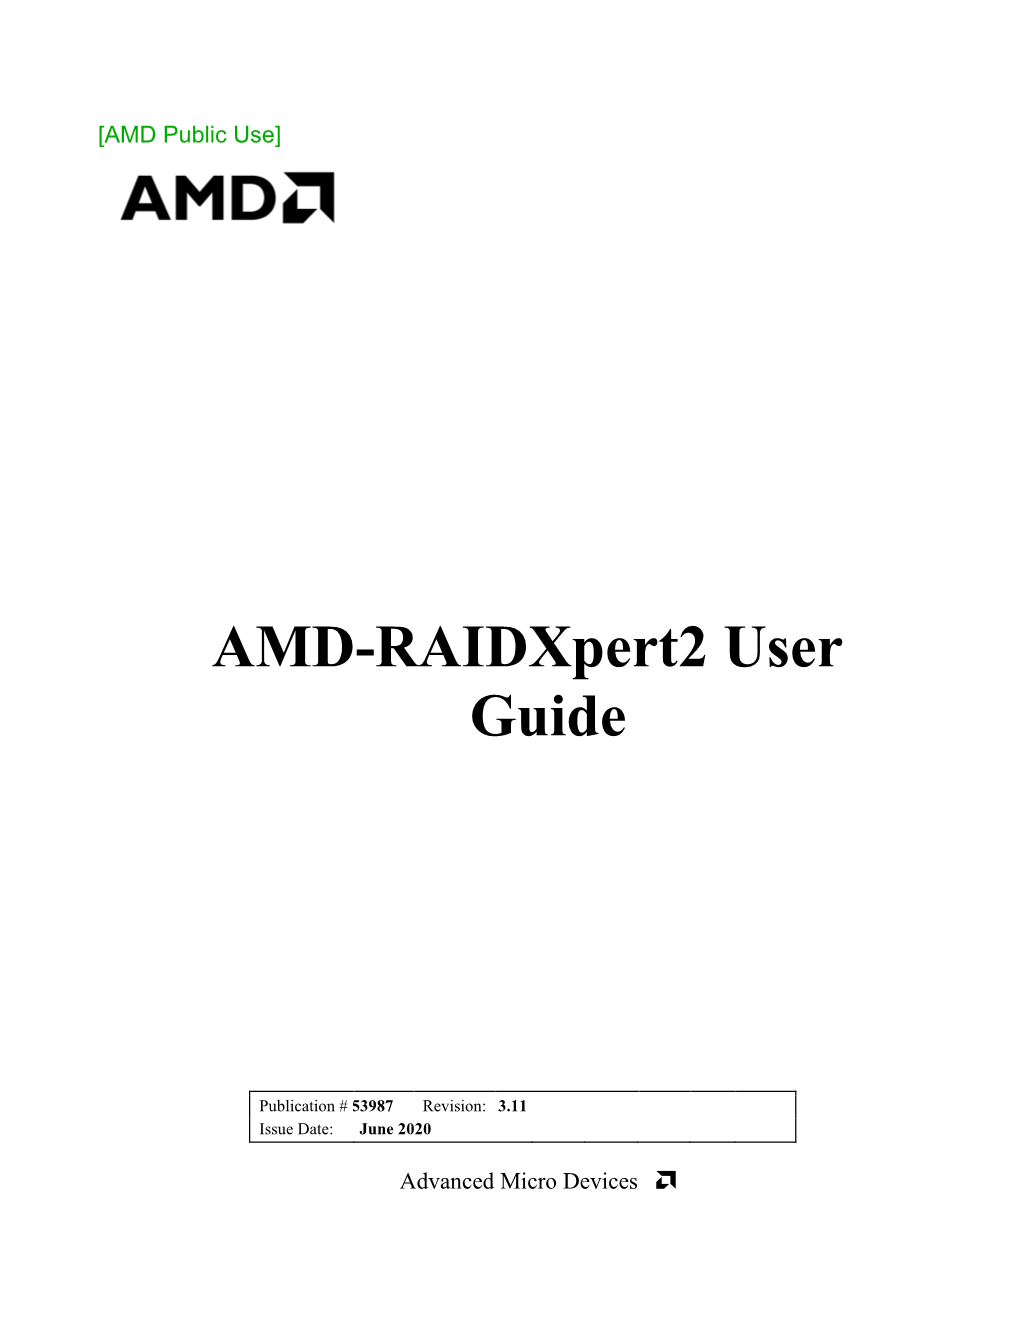 AMD-Raidxpert2 User Guide